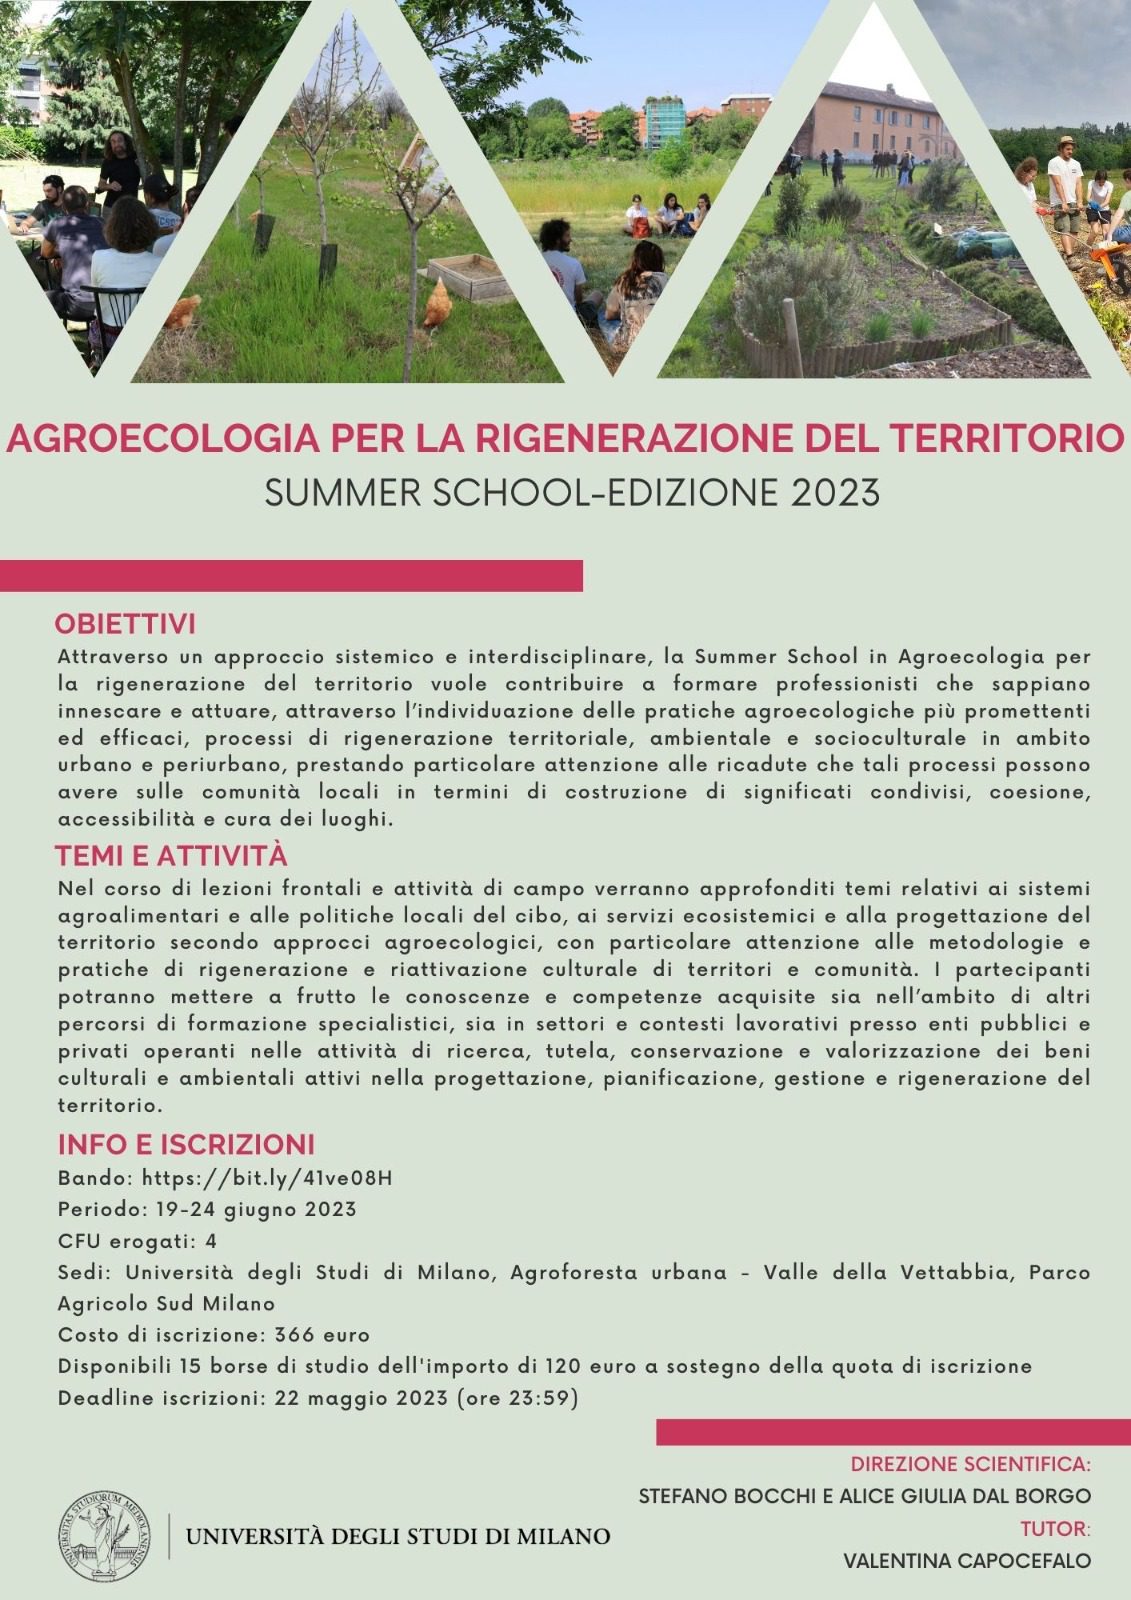 Agroecology for land regeneration